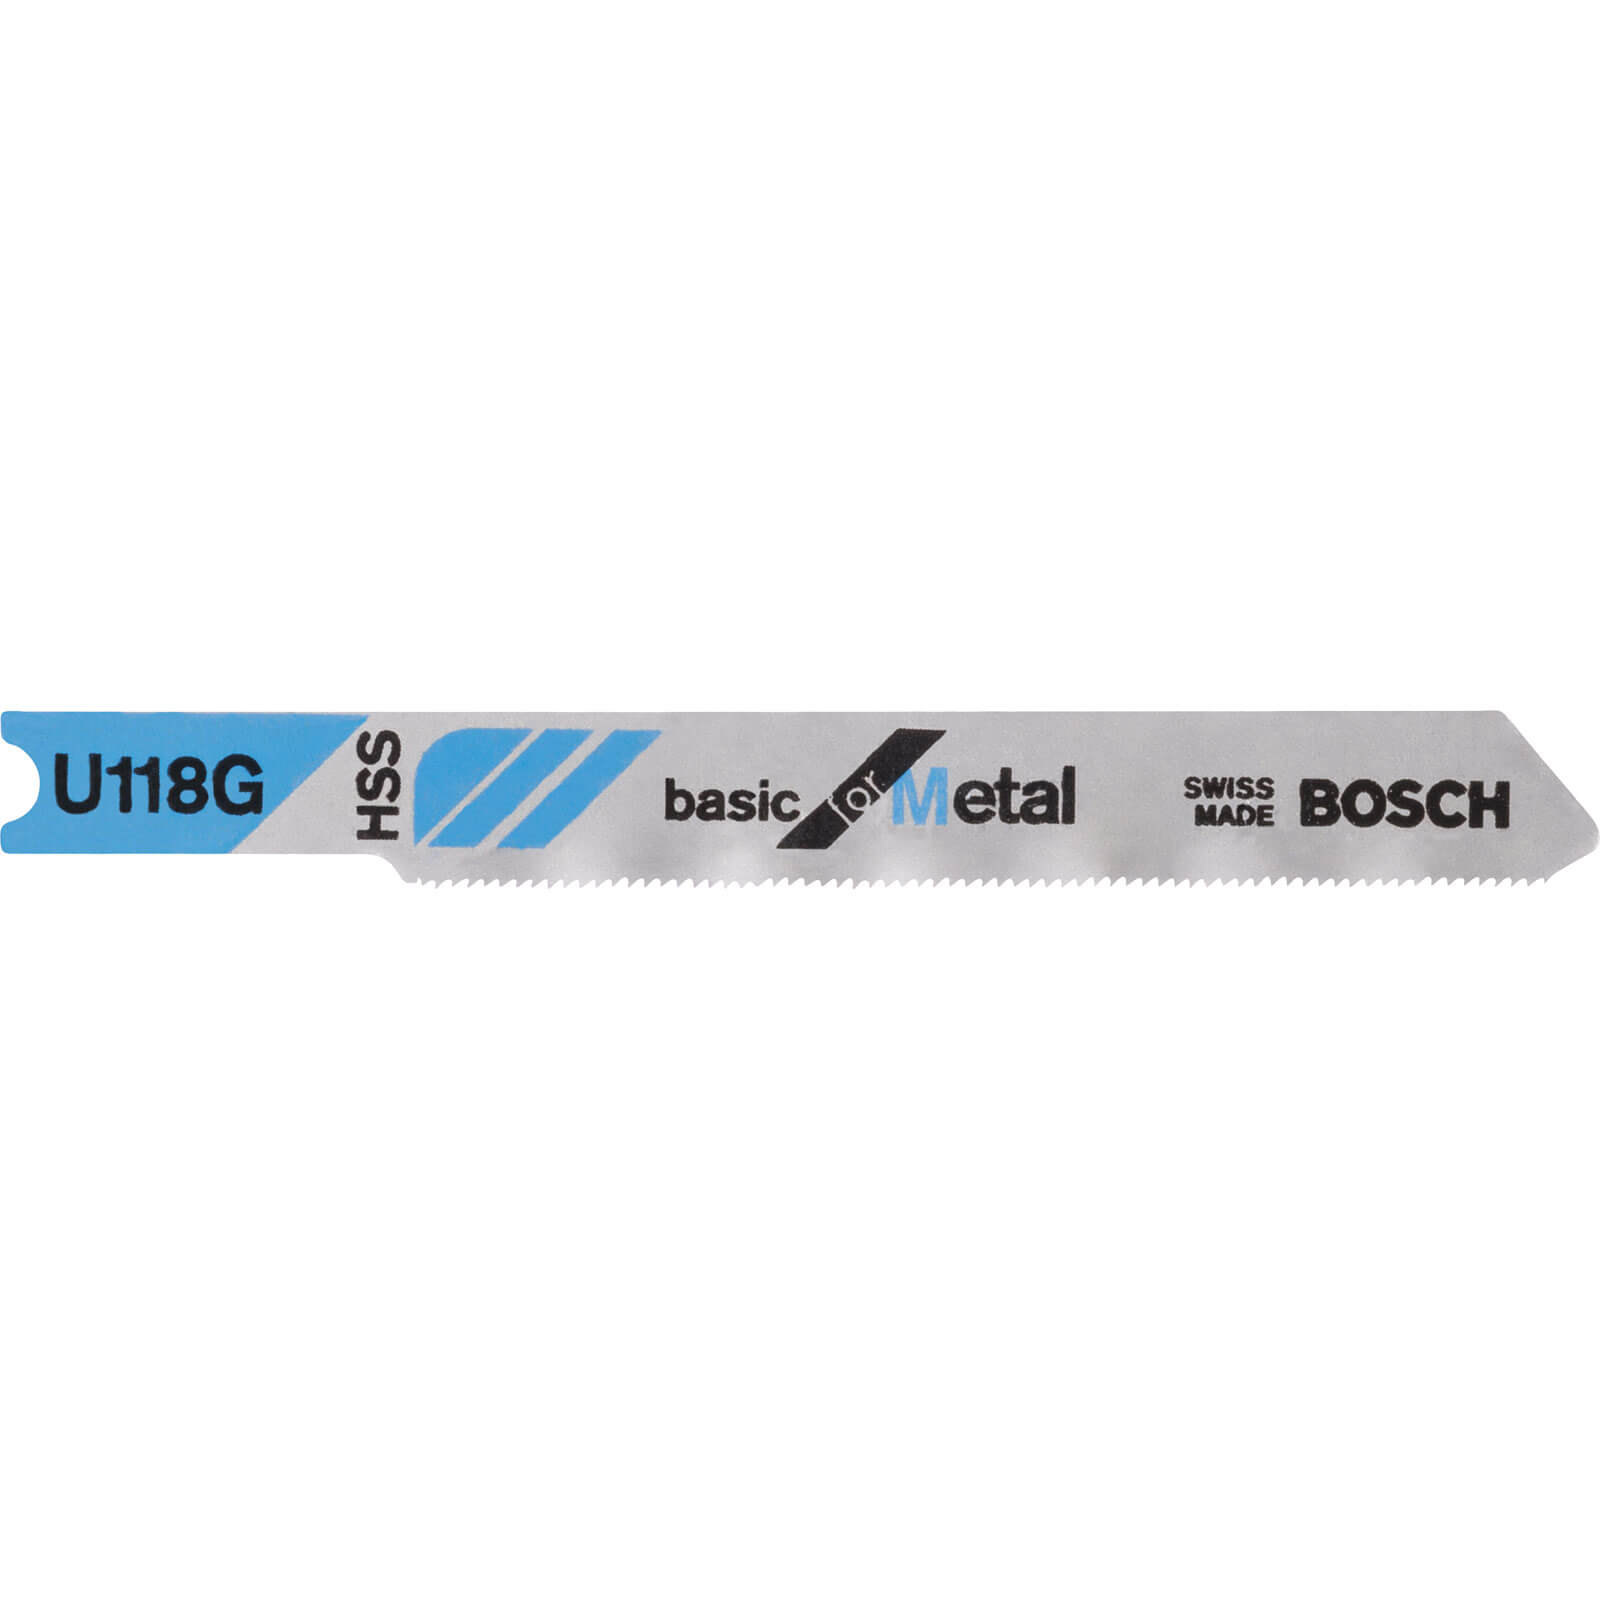 Image of Bosch U118 G Metal Cutting Jigsaw Blades Pack of 3